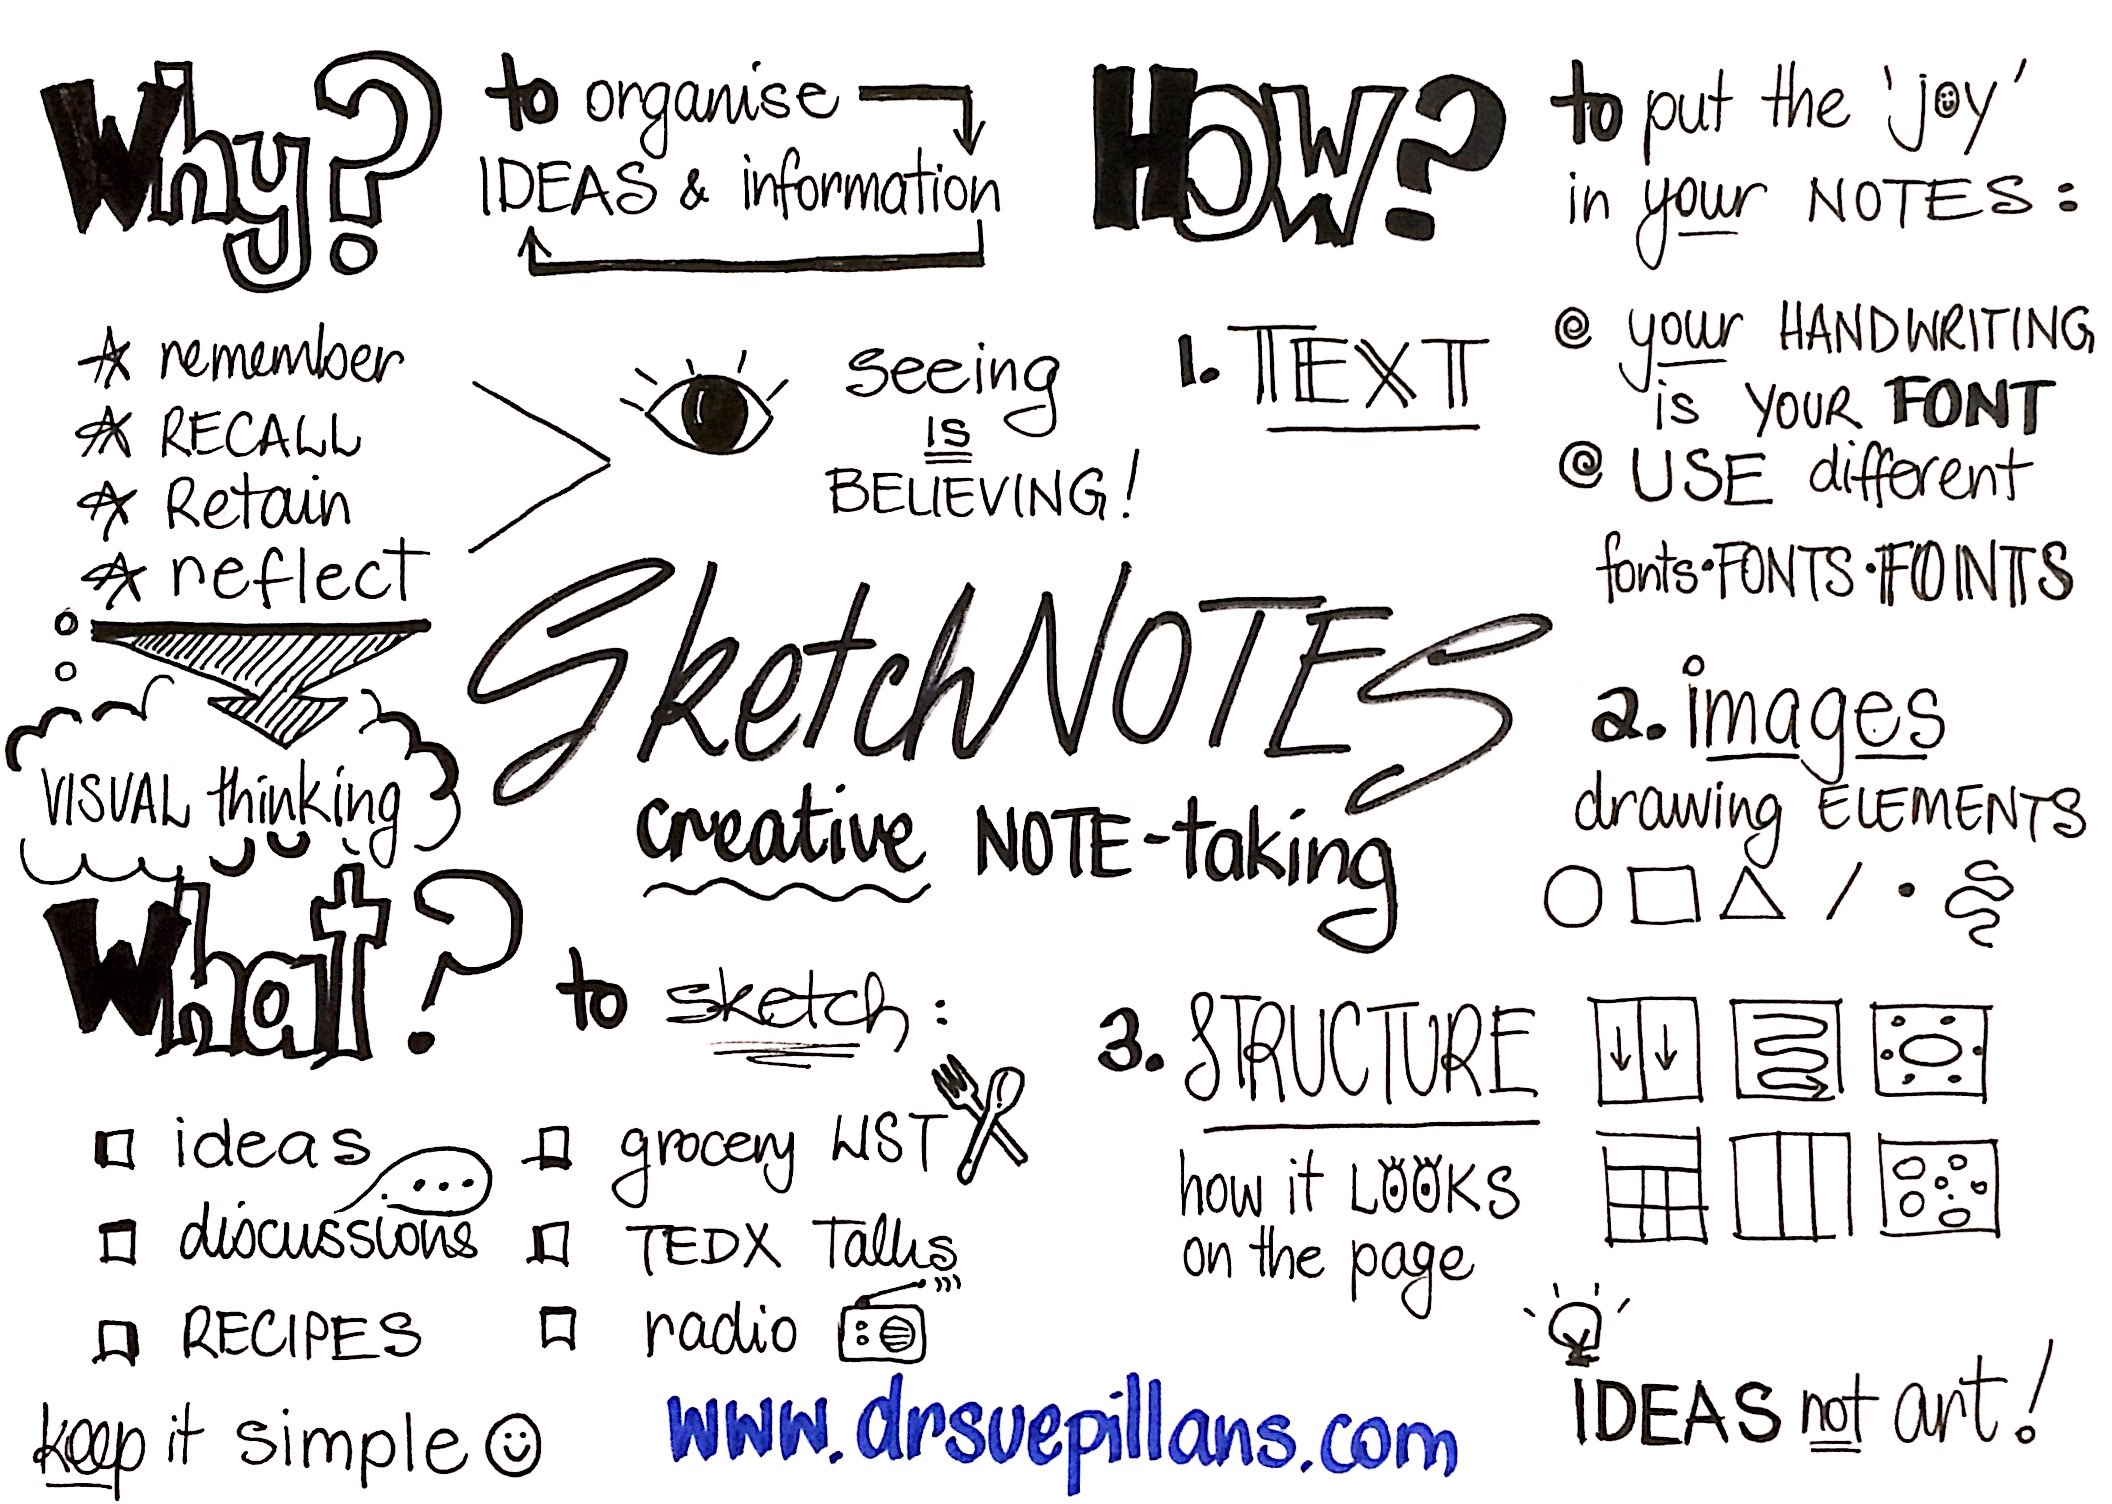 Notes ideas